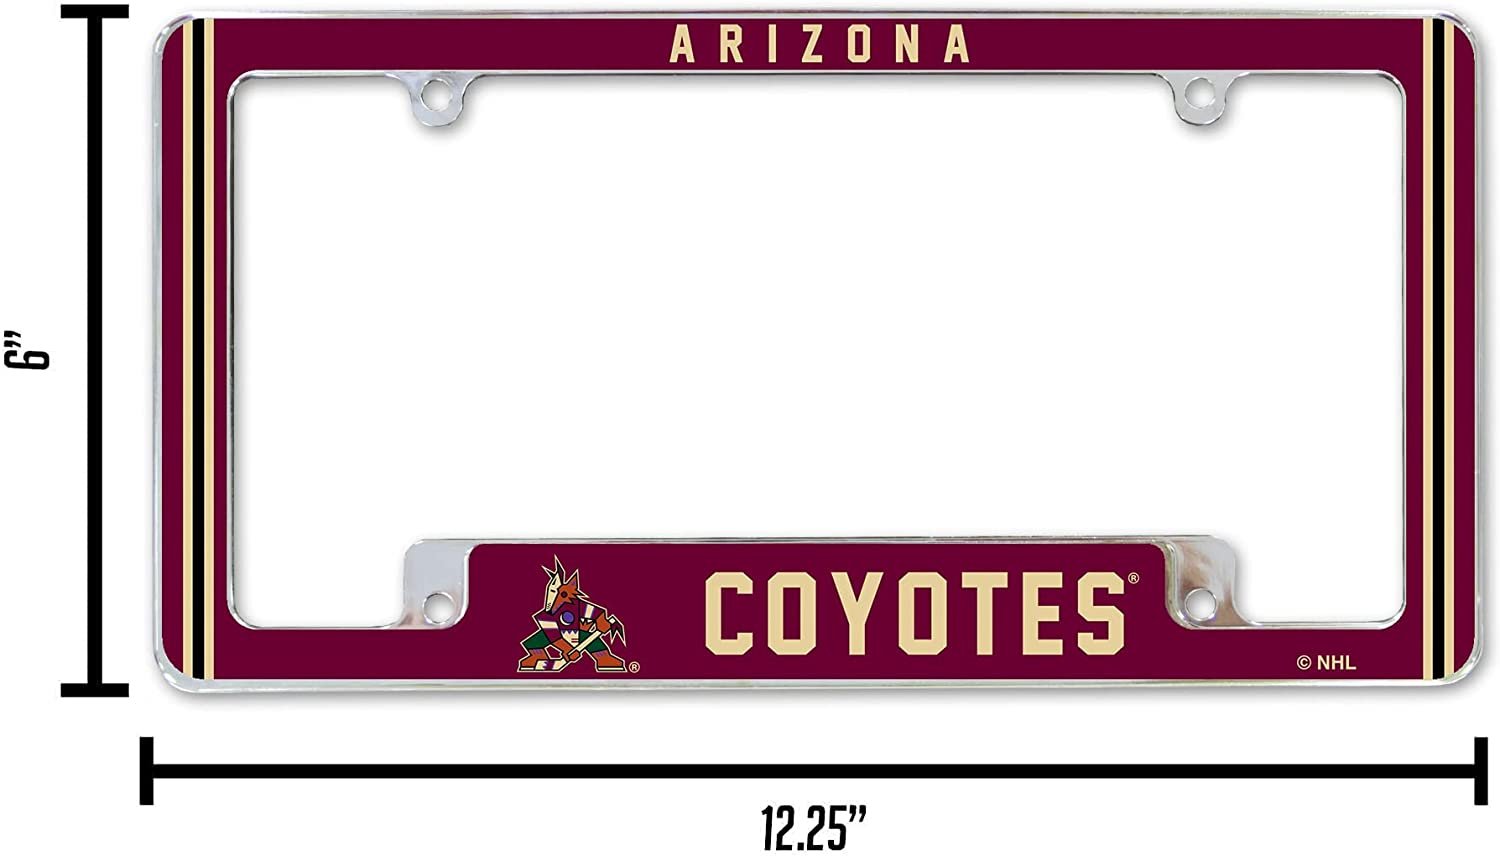 Arizona Coyotes Metal License Plate Frame Chrome Tag Cover Alternate Design 6x12 Inch